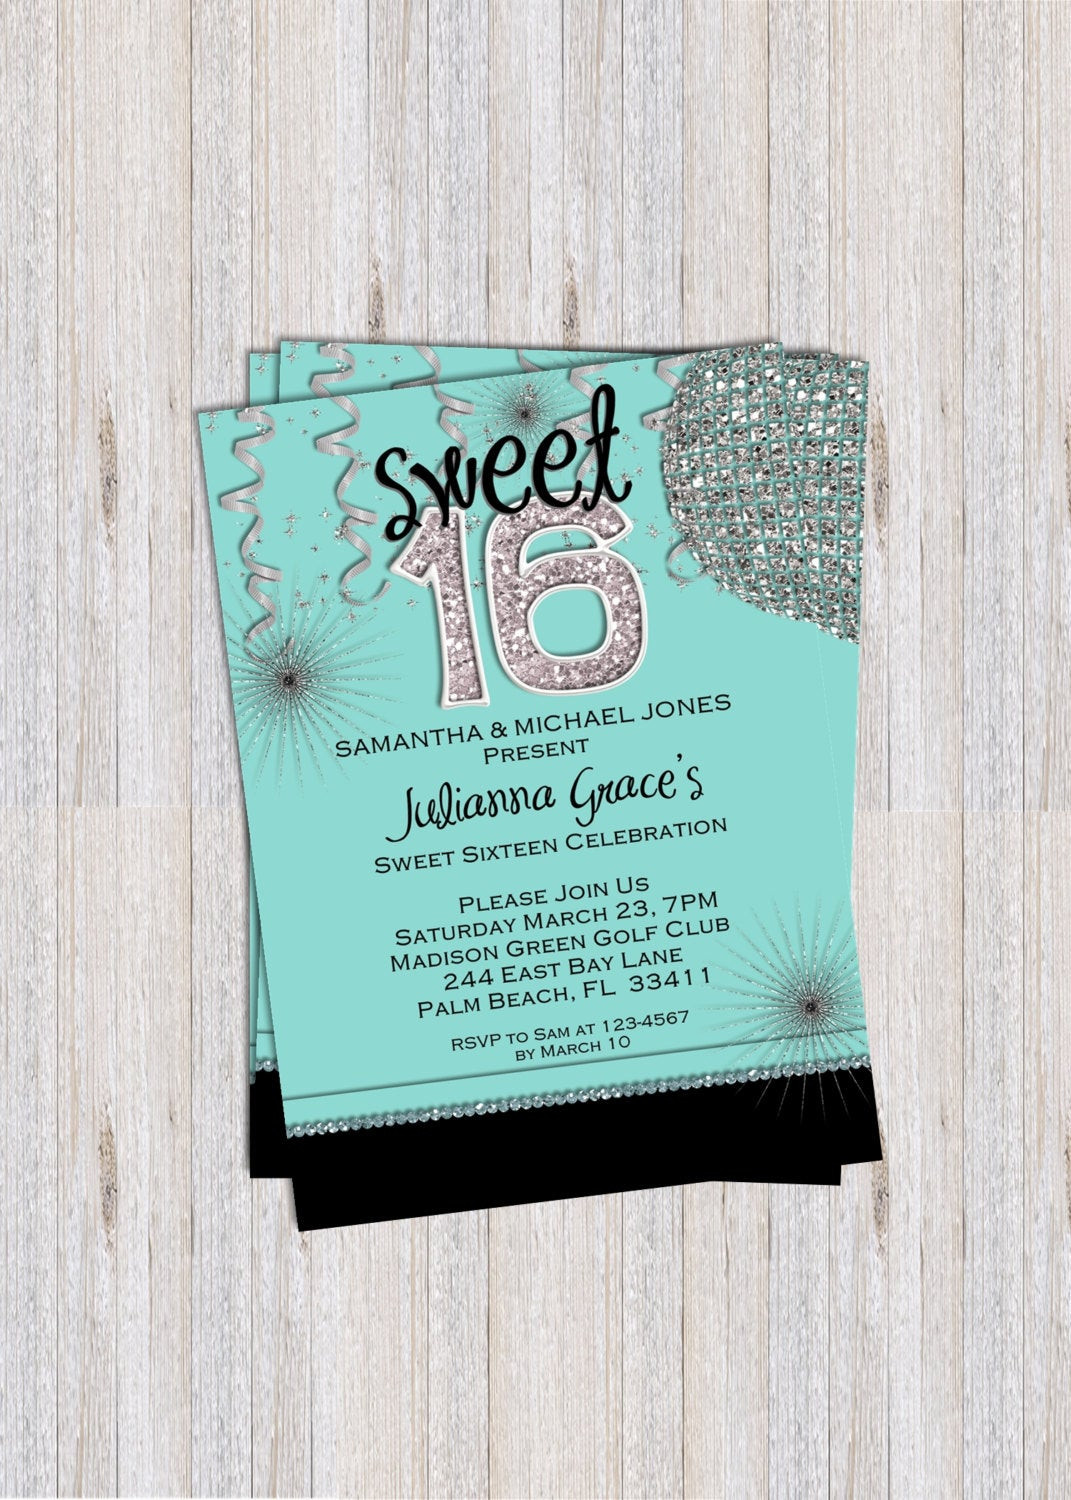 Best ideas about Sweet 16 Birthday Invitations
. Save or Pin Sweet 16 Birthday Invitation Quinceanera Blue Custom Now.